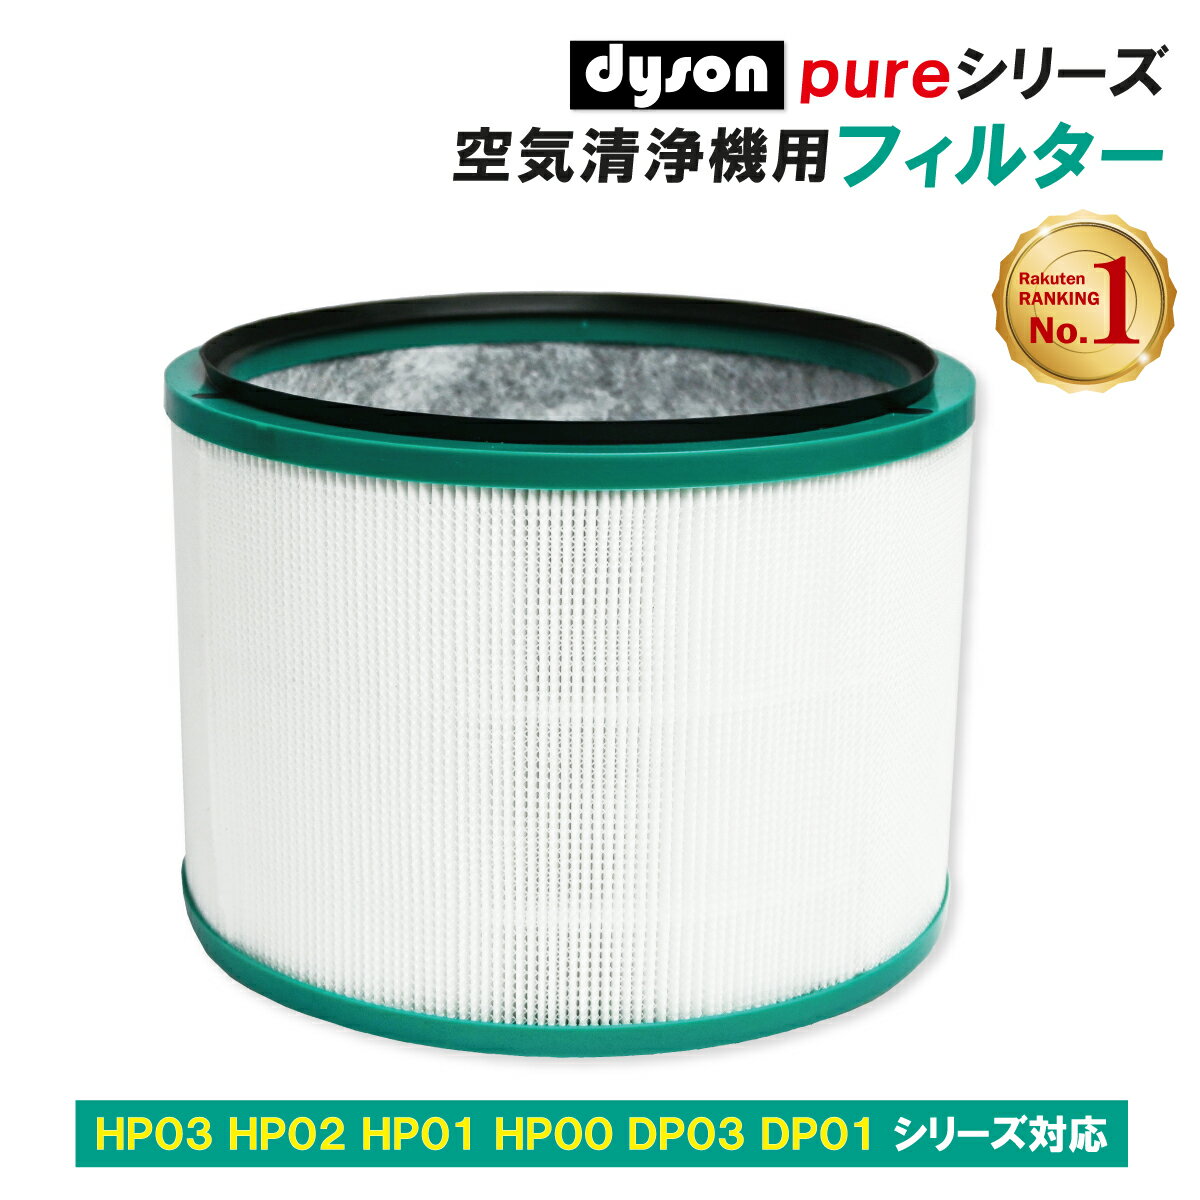 dyson ダイソン 空気清浄機 フィルター HP03 HP02 HP01 HP00 DP03 DP01 ファン 交換用 互換品 1個